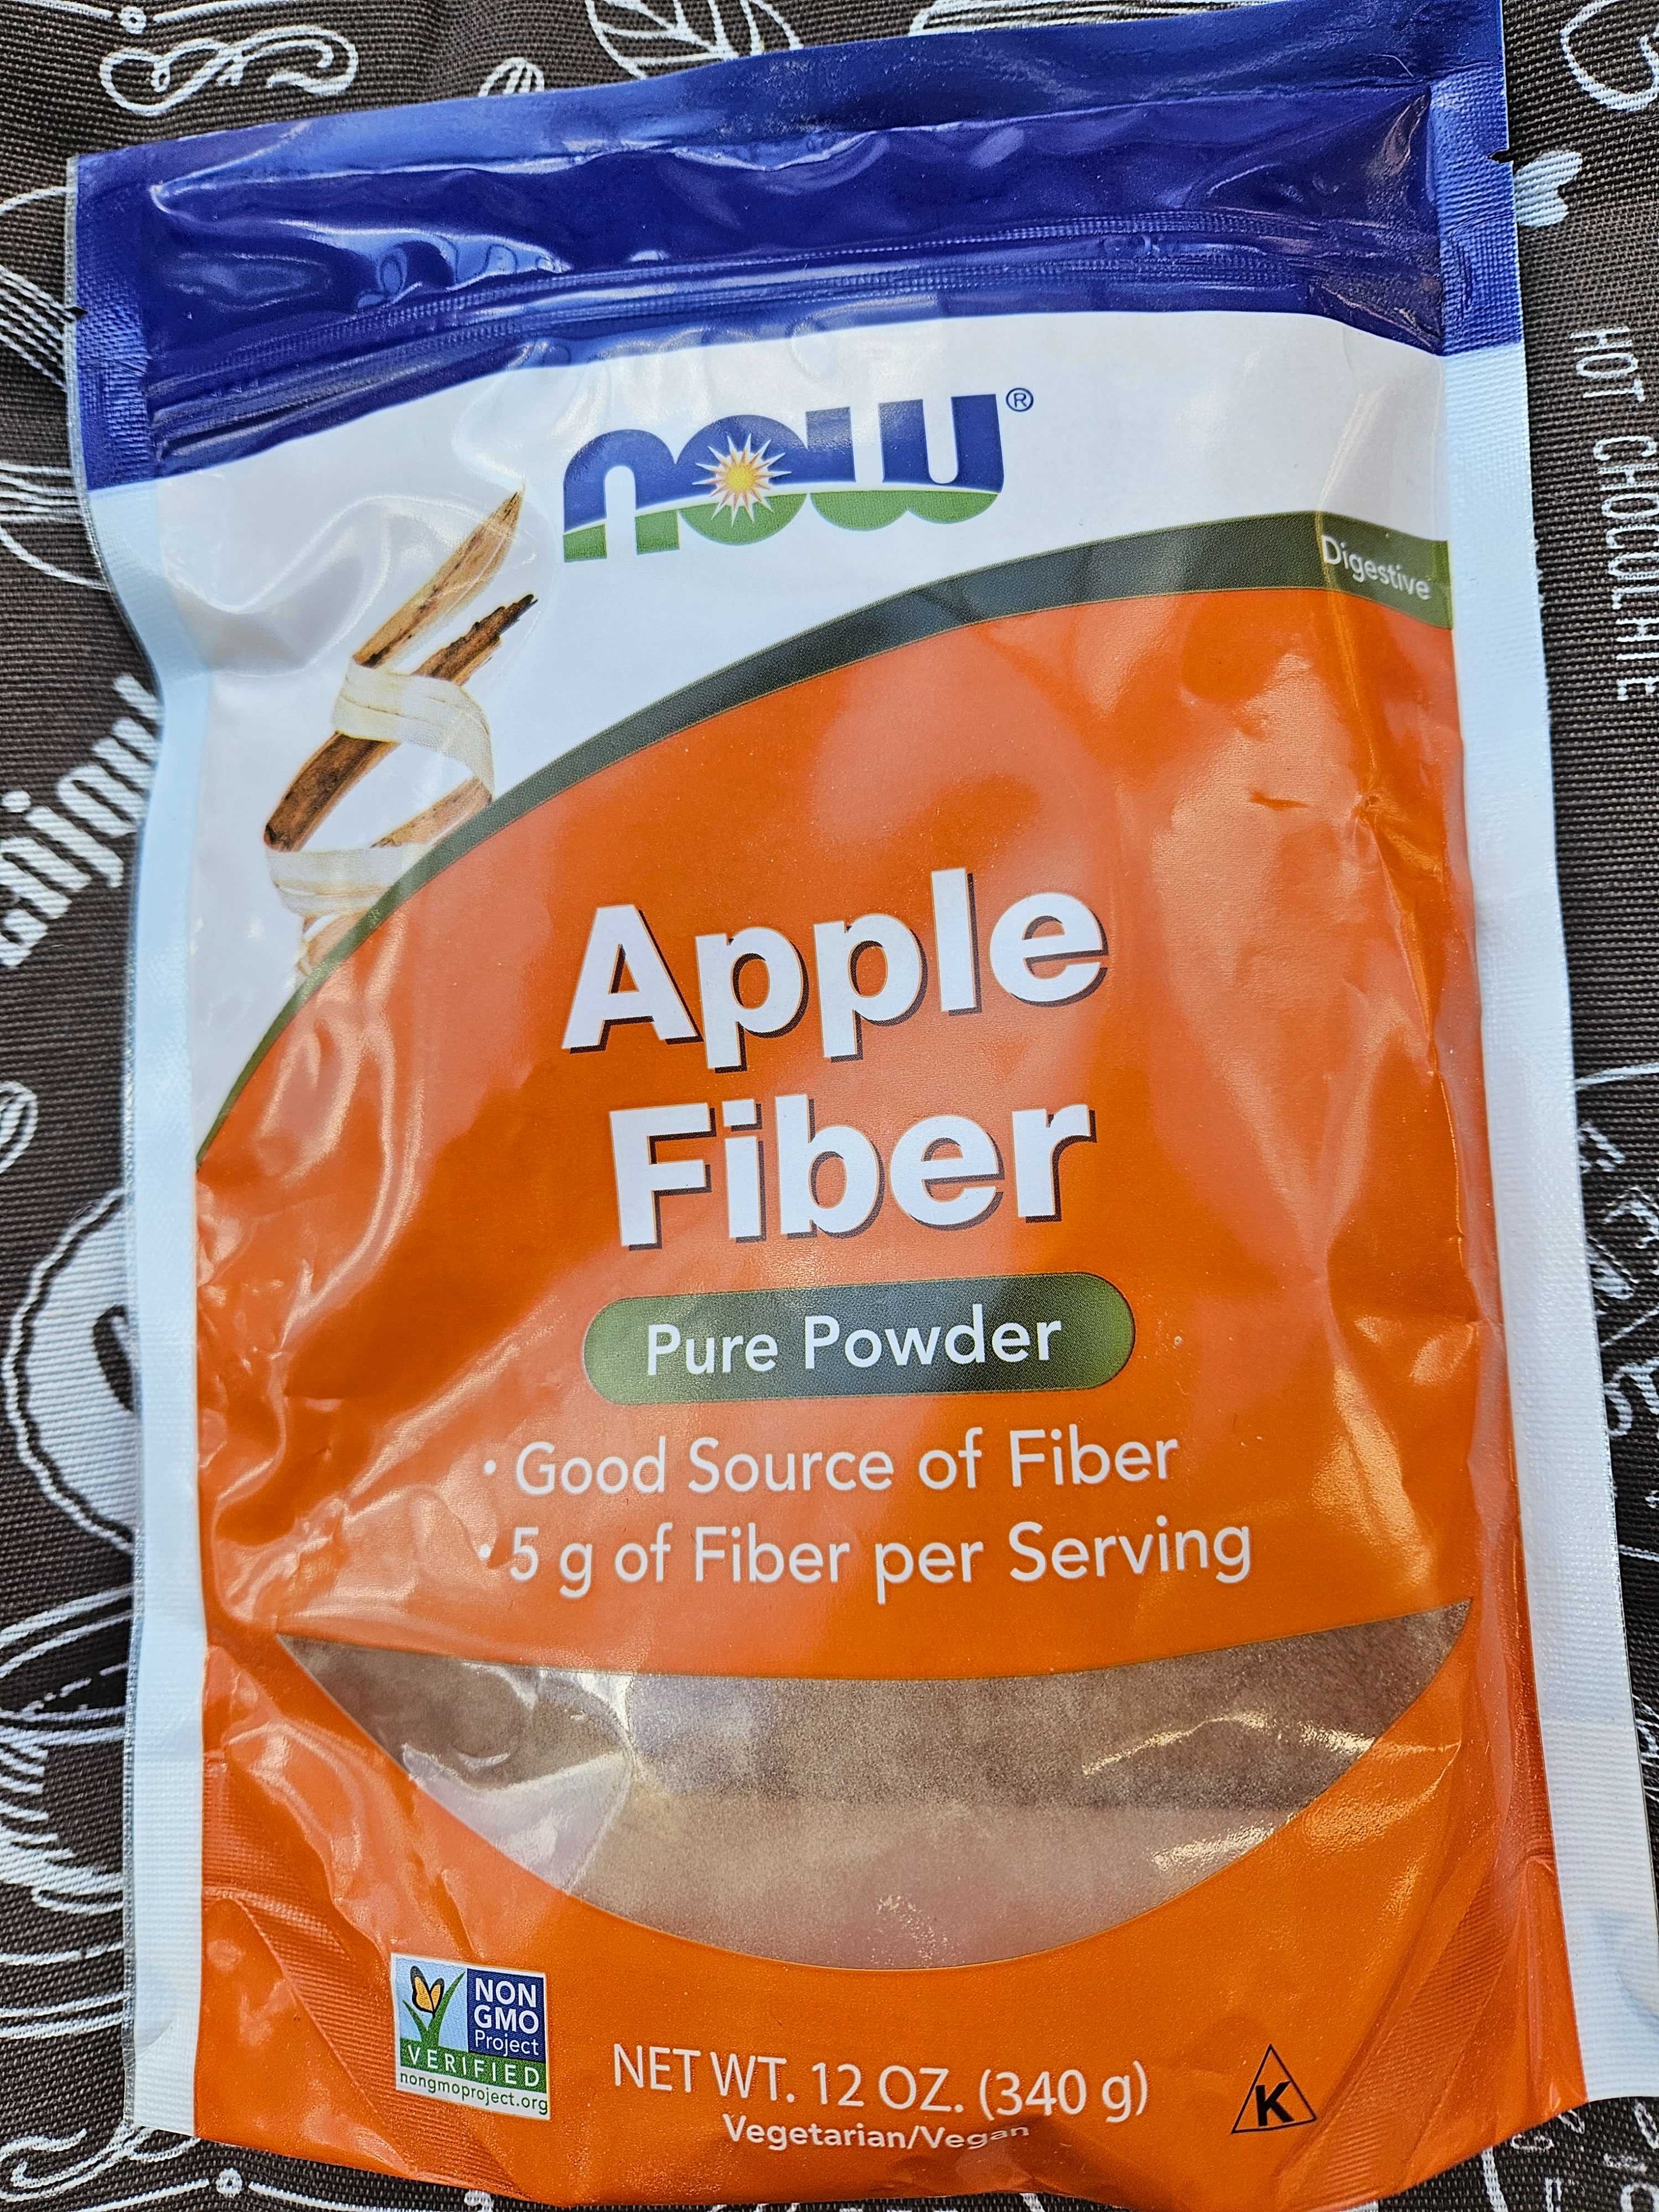 Now Foods, Apple Pectin fiber яблочний пектин клетчатка порошок капс